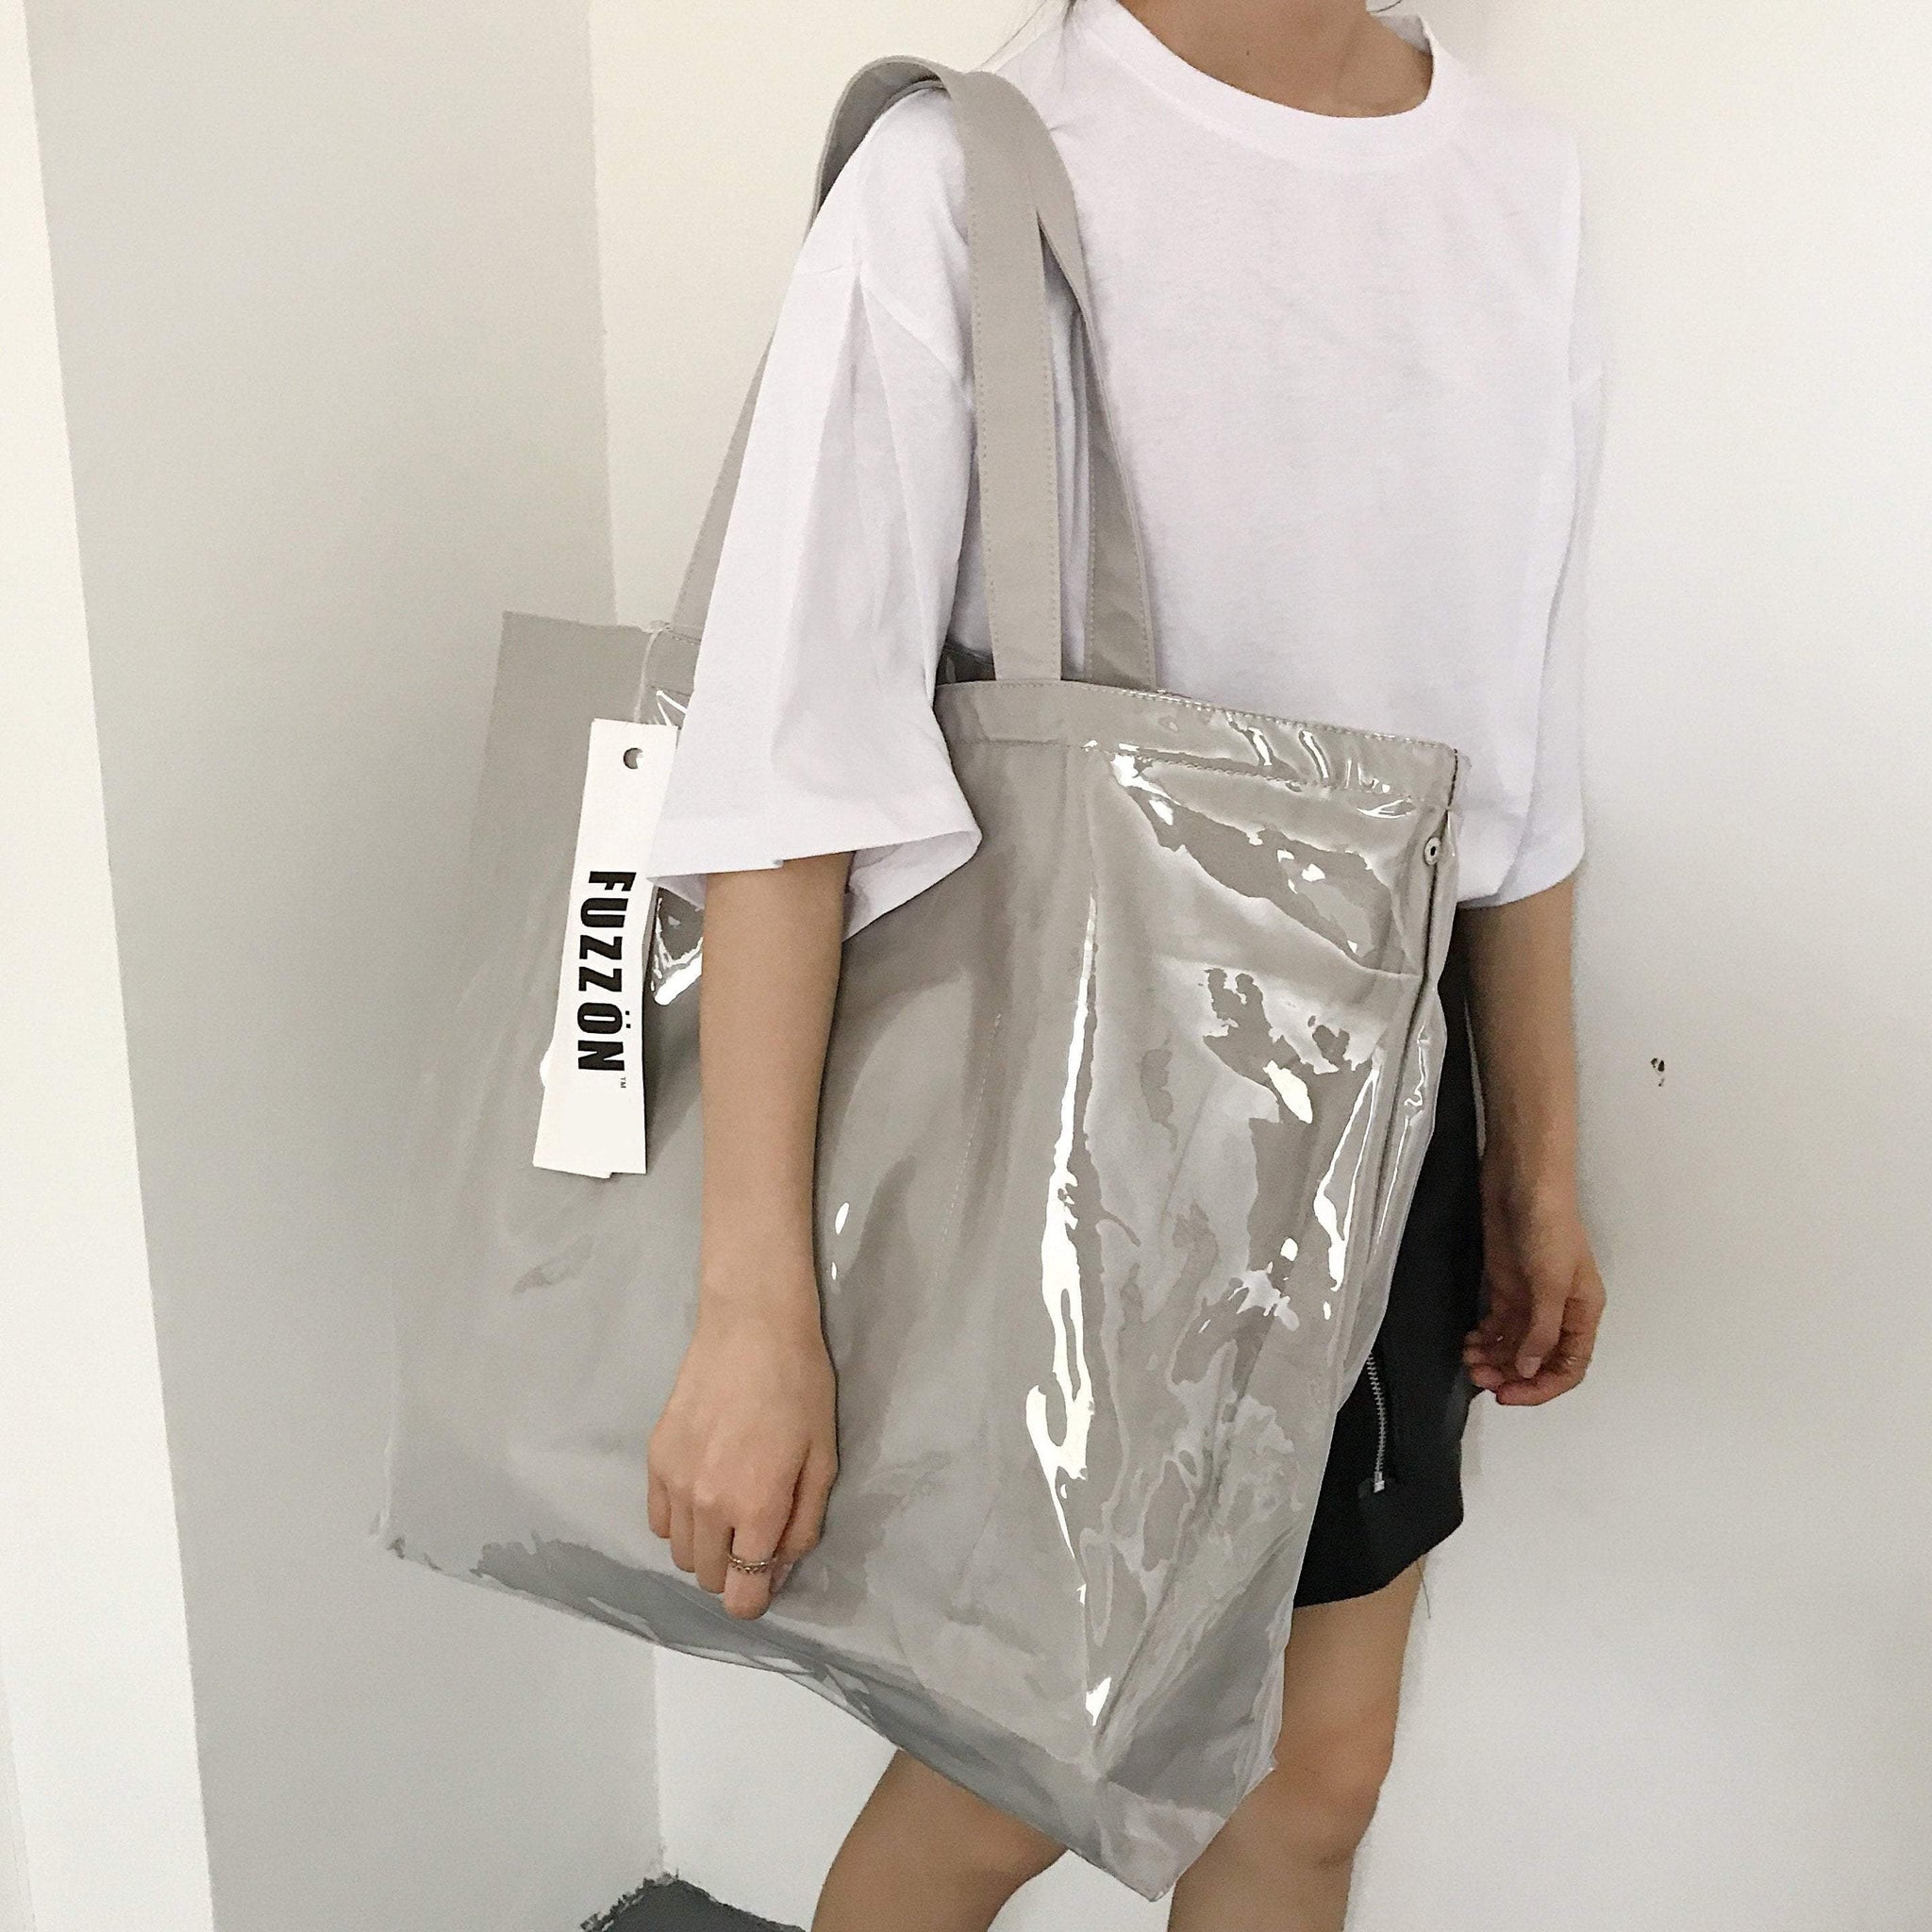 Silver Waterproof Tumblr Large Shoulder Bag